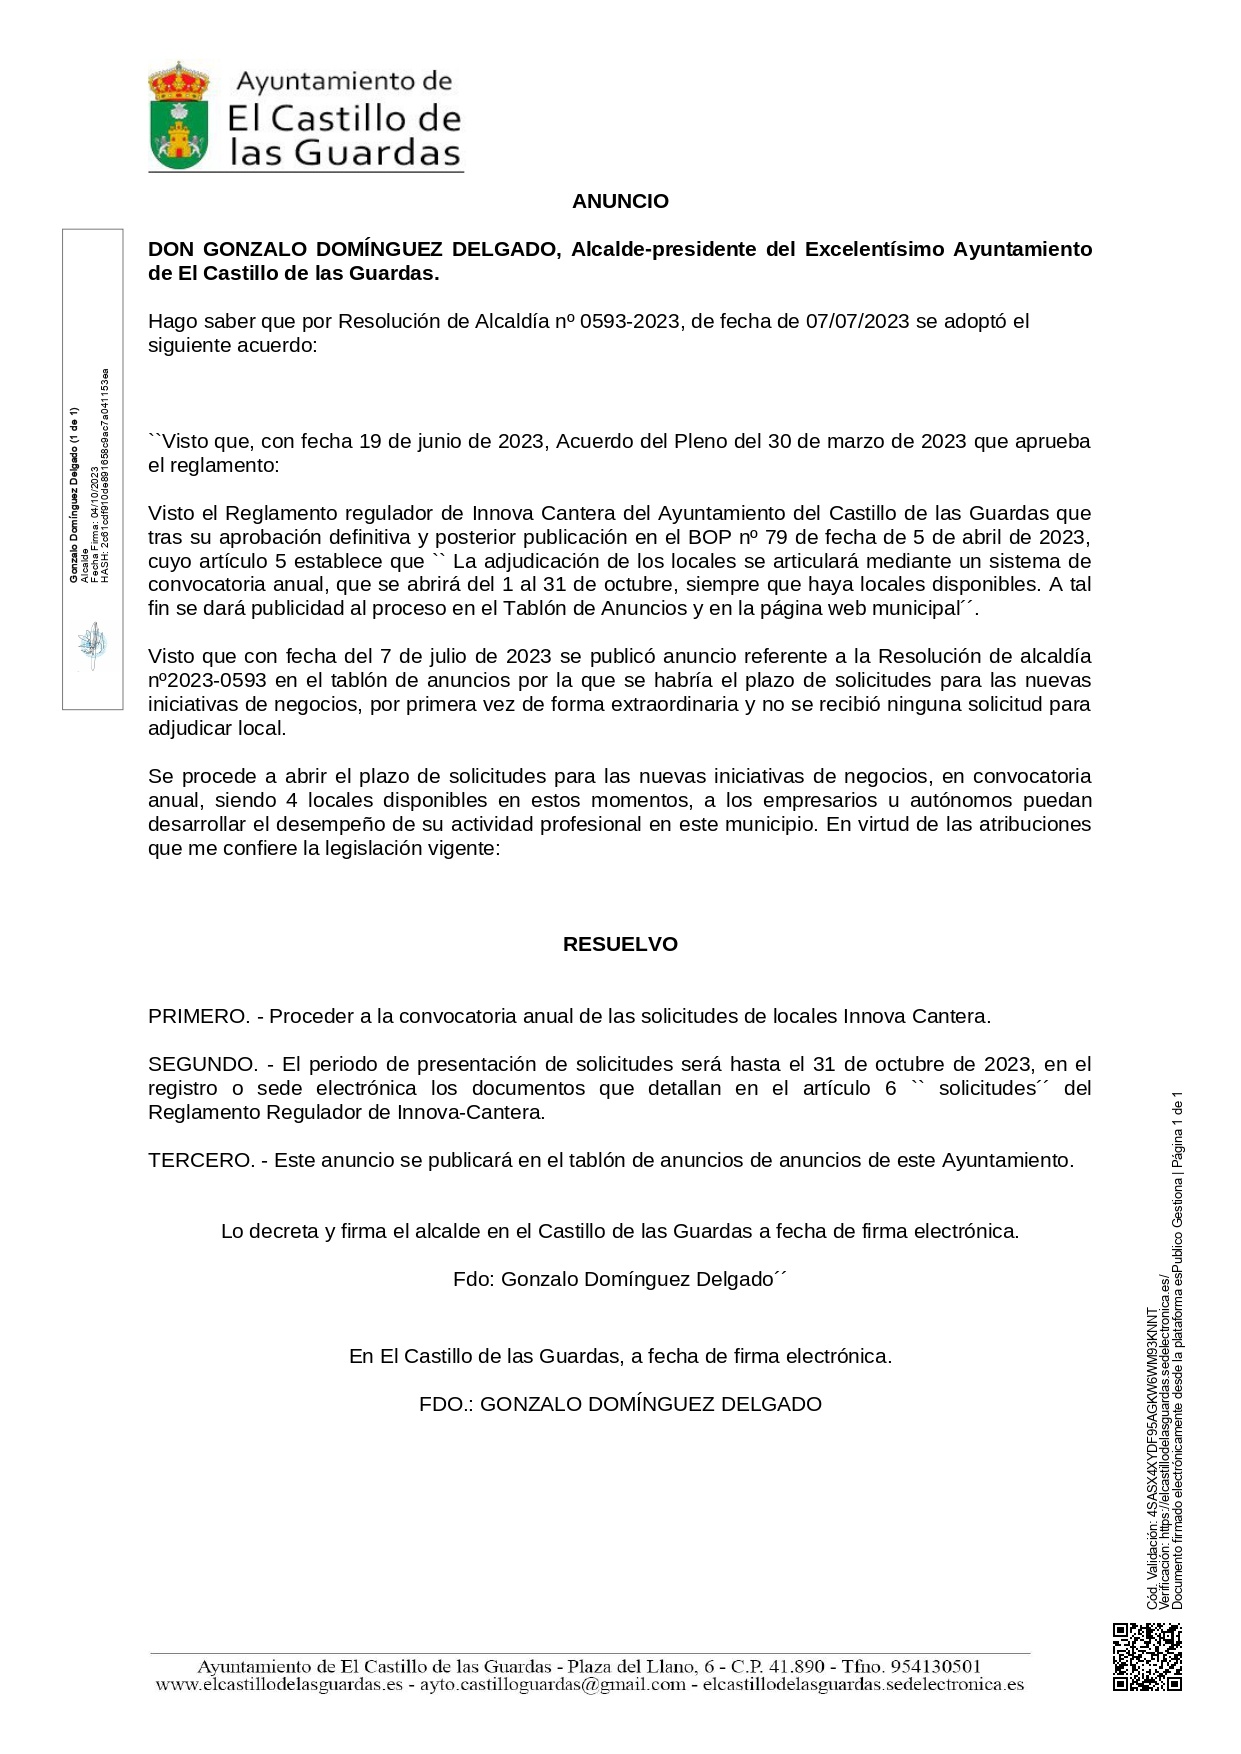 20231004_Publicación_Anuncio_ANUNCIO RESOLUCIÓN DE ALCALDÍA INNOVA CANTERA, CONVOCATORIA ANUAL PLAZOS DE SOLICITUDES-1_page-0001